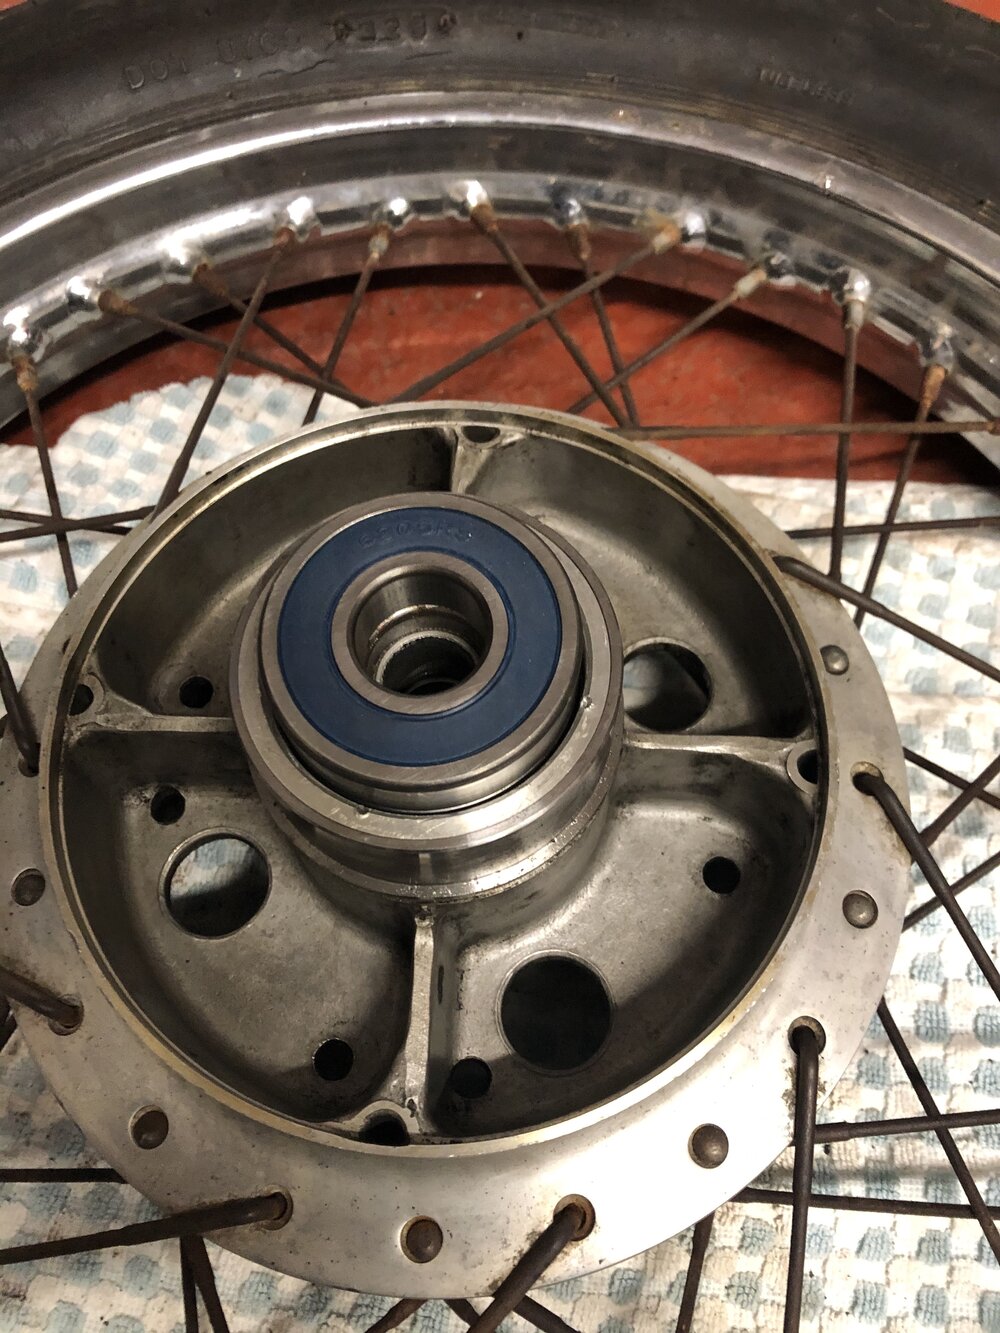 Mable Honda CB550 Cafe Racer rear wheel rebuild use old bearing.jpg